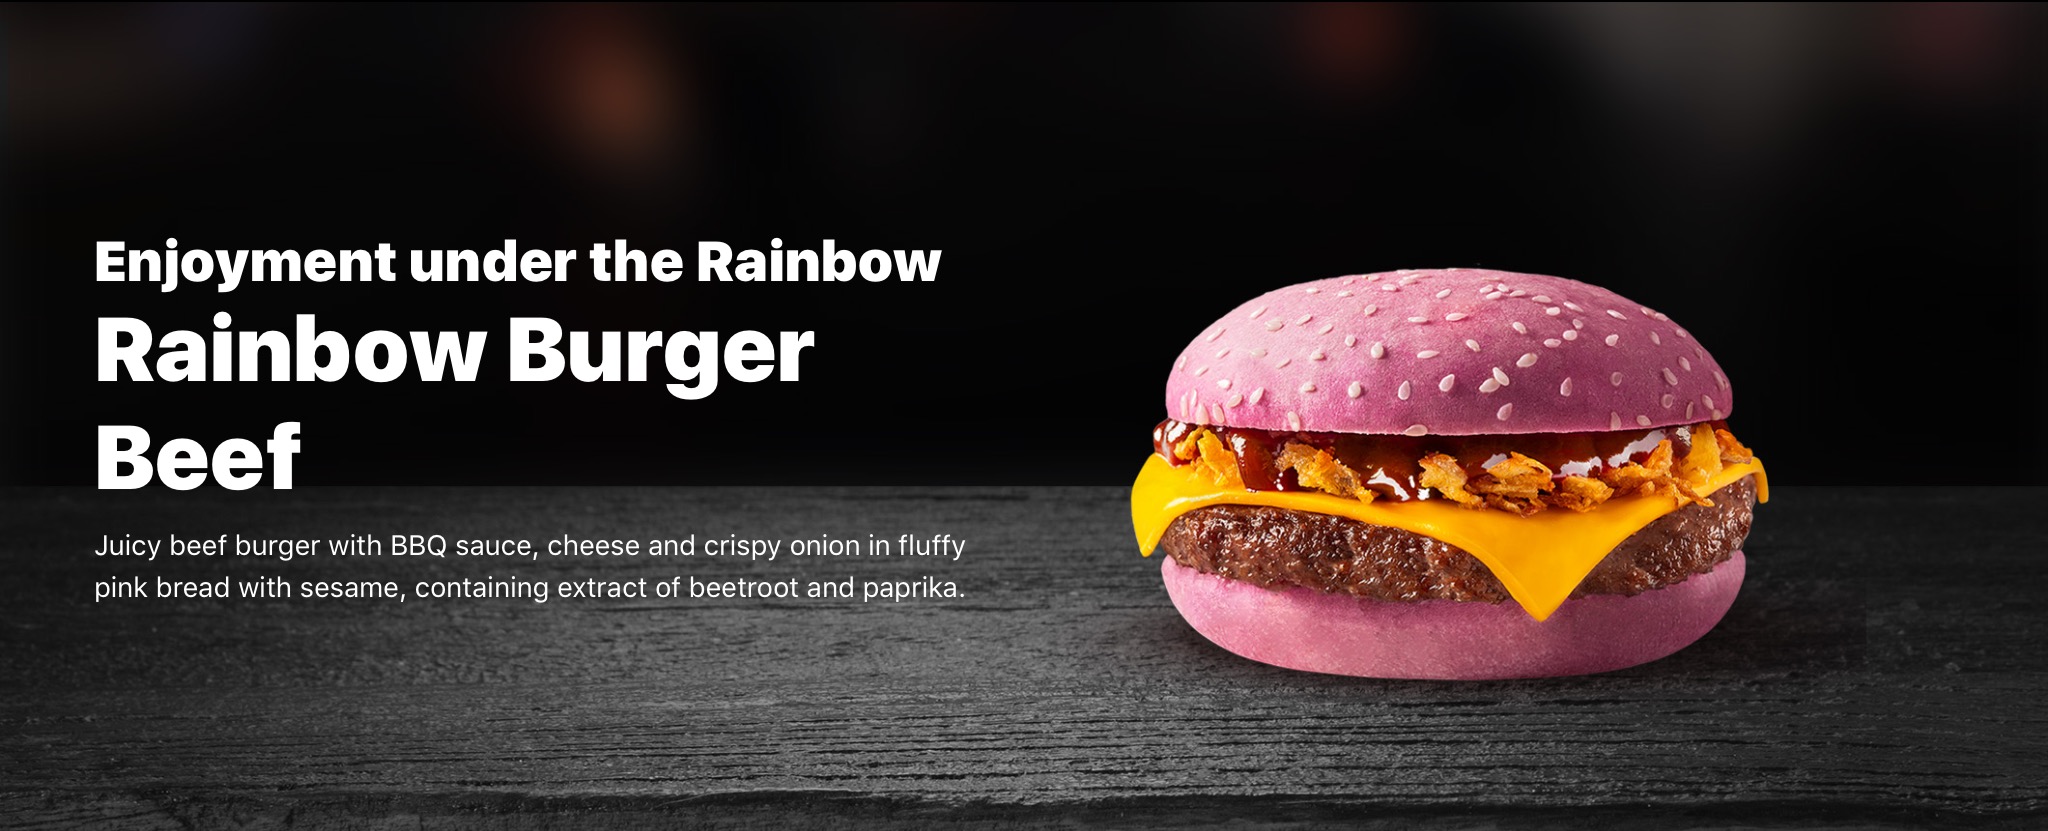 McDonald's Rainbow Burger Beef